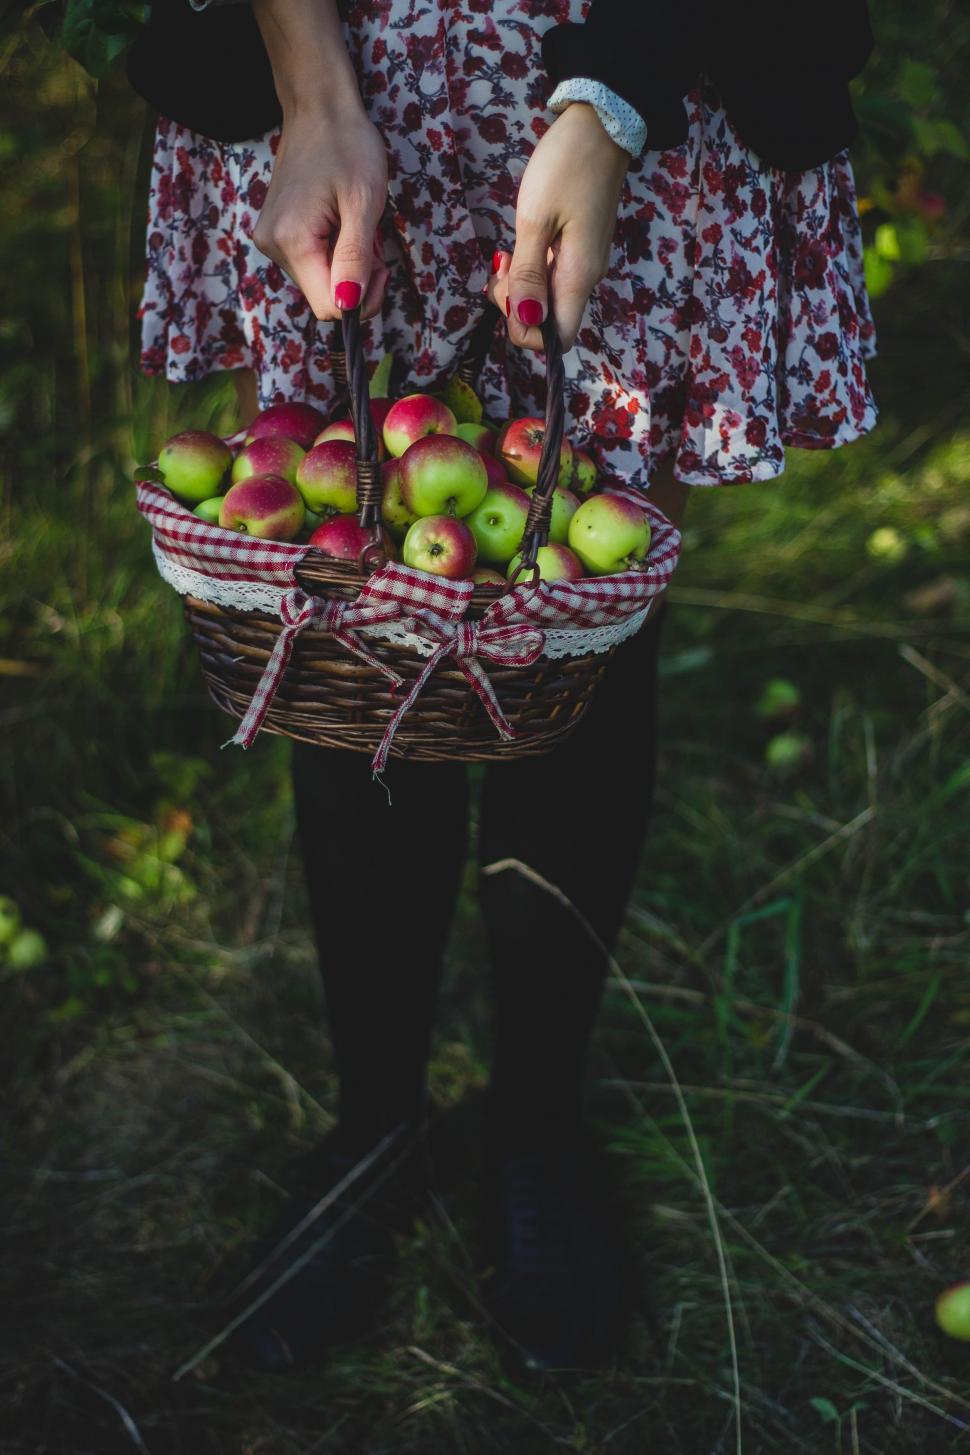 Free Image of Hands Holding Basket of Apples  